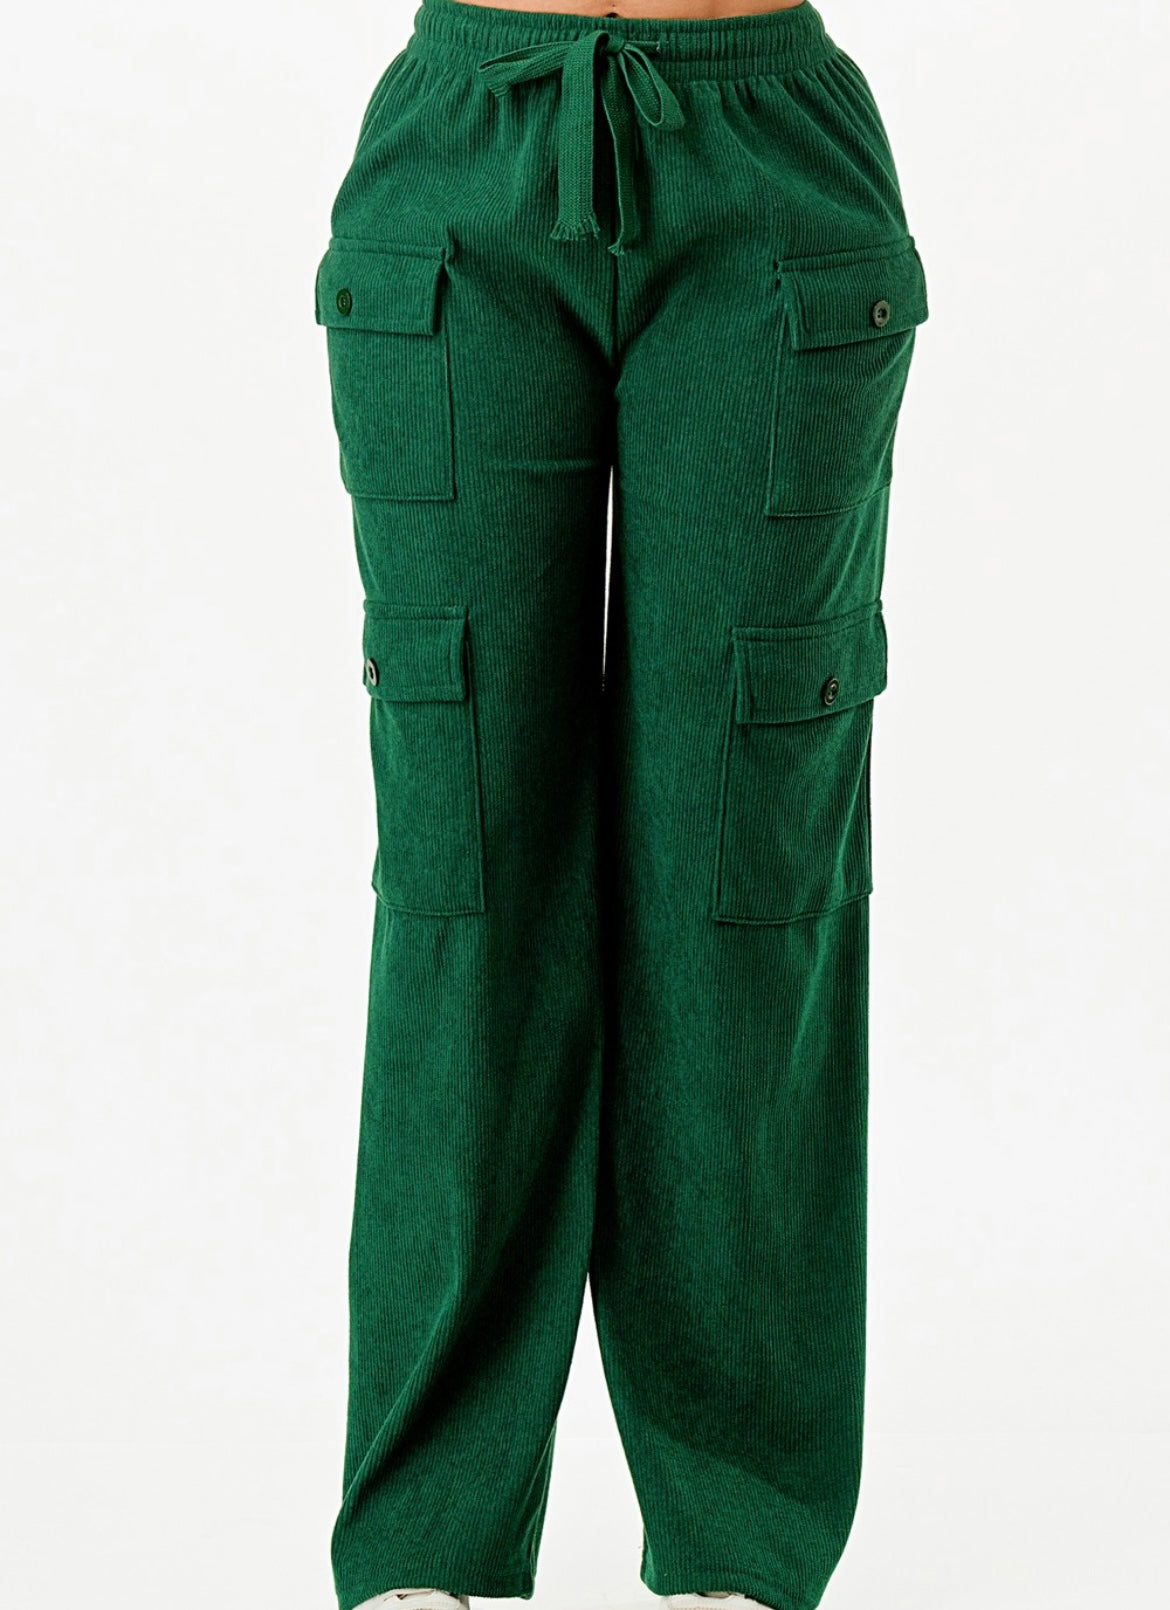 “LEVEL UP” corduroy cargo pants(emerald green)